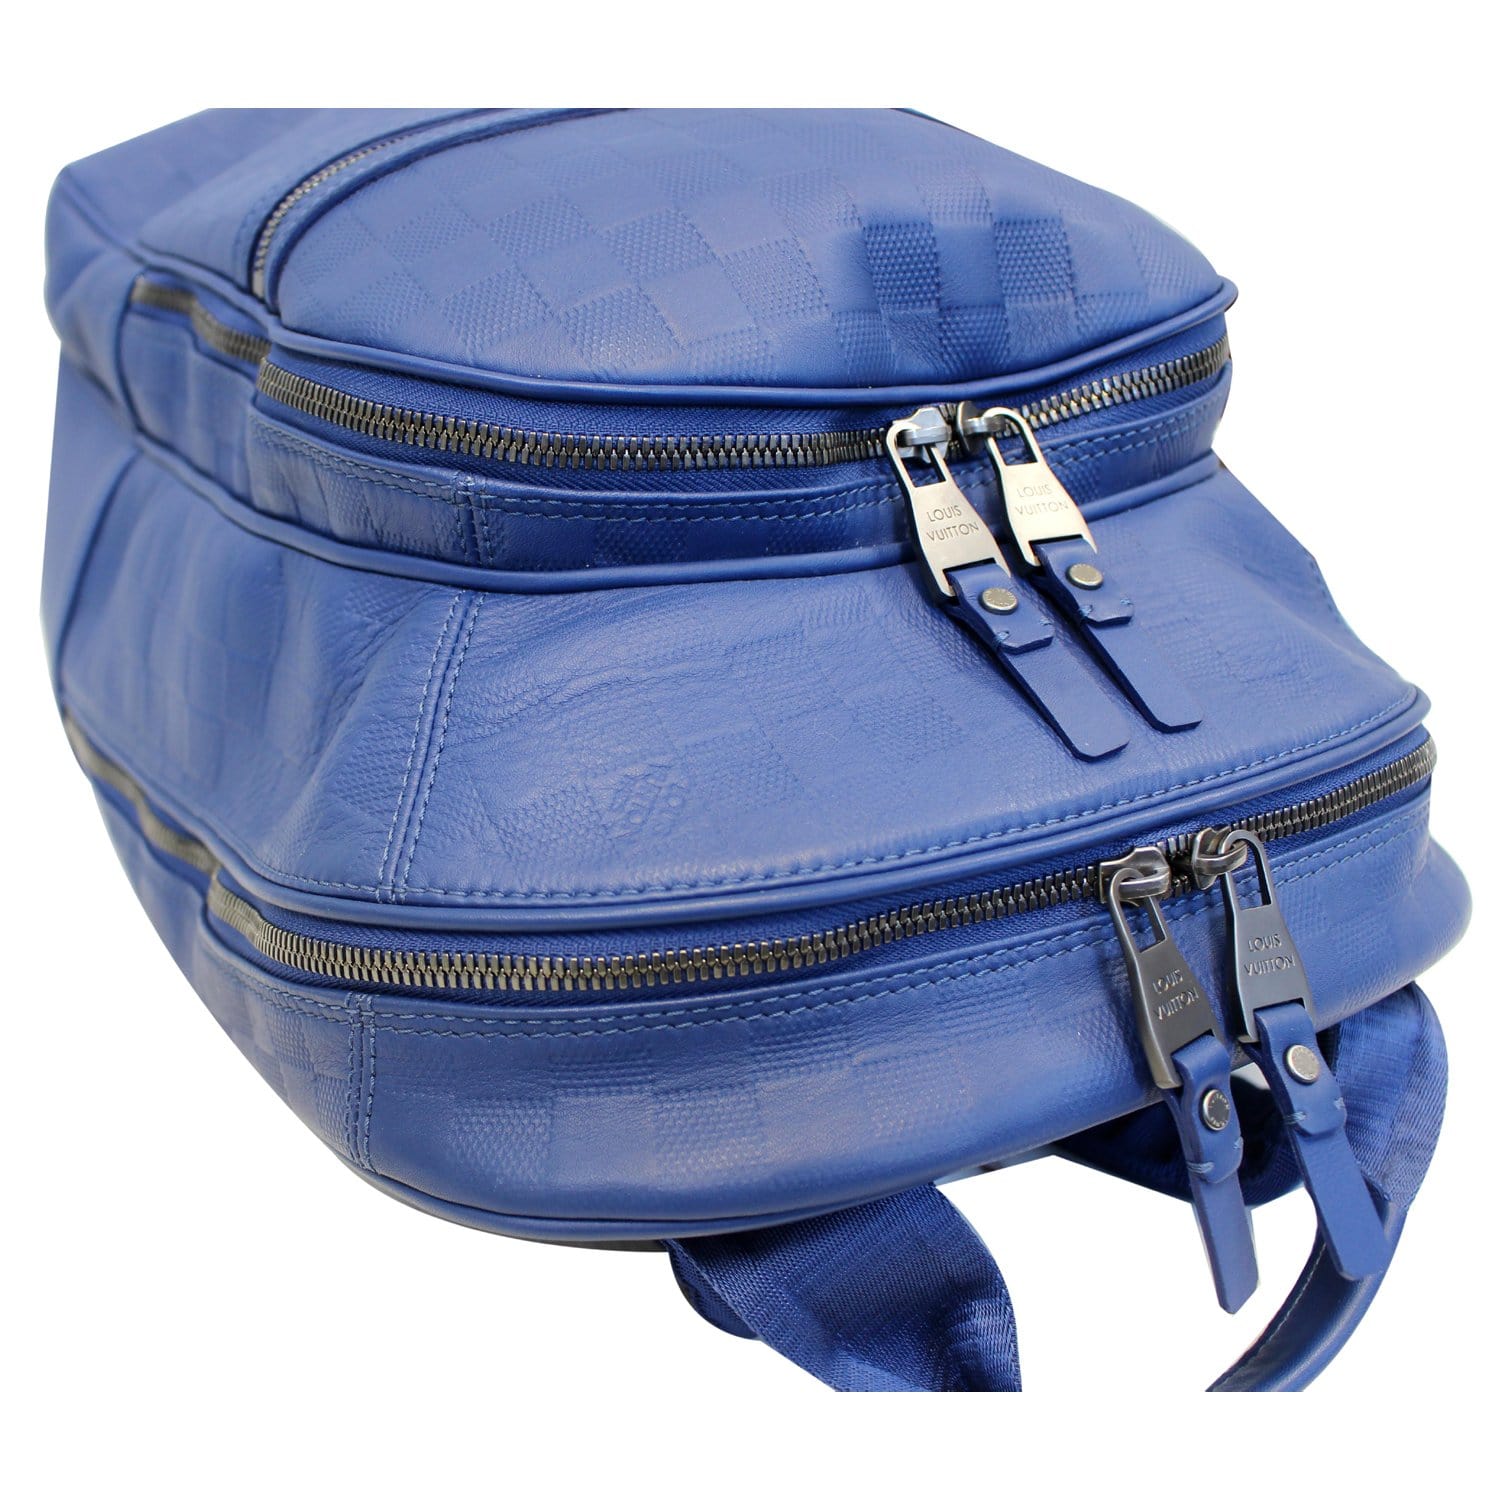 Louis Vuitton, Bags, Louis Vuitton N446 Damierinfini Avenue Backpack Bag  Damierinfinileather Blue